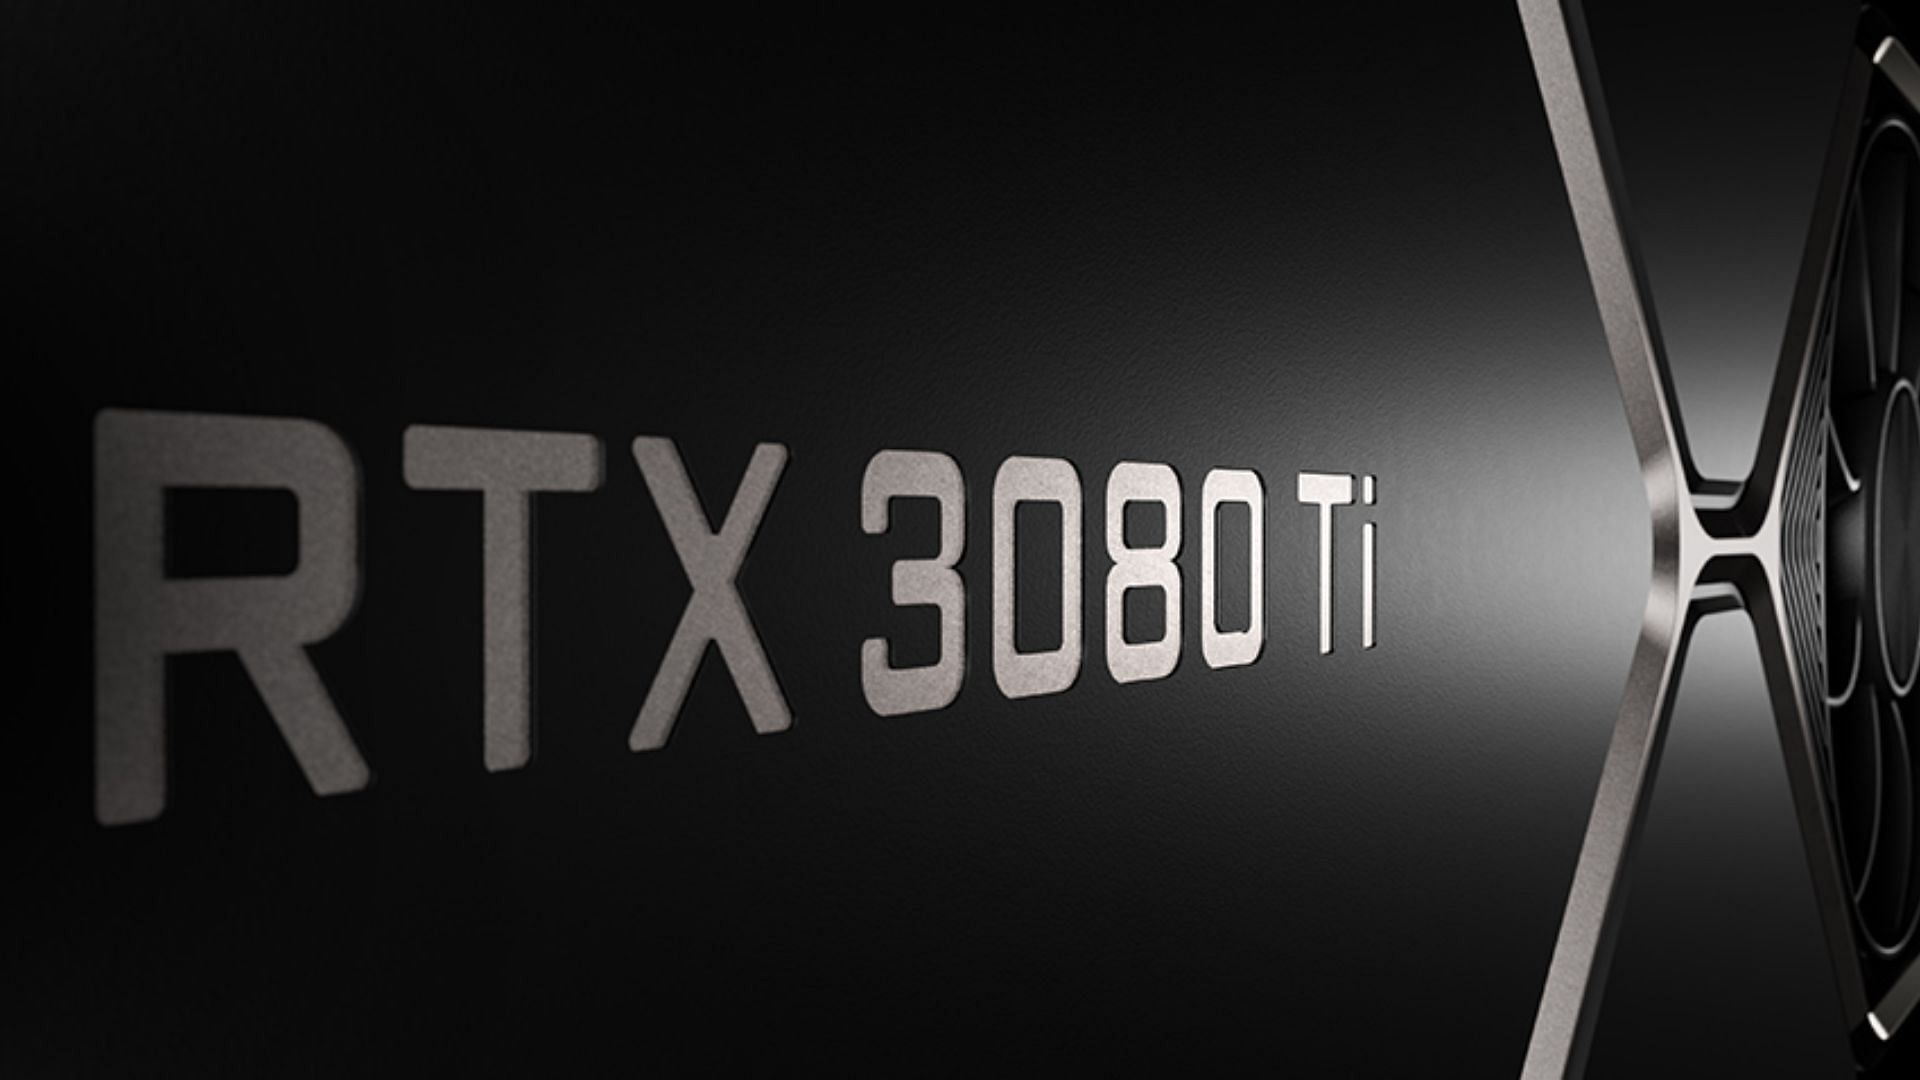 The Nvidia RTX 3080 Ti graphics card can handle Palworld like a charm (Image via Nvidia)